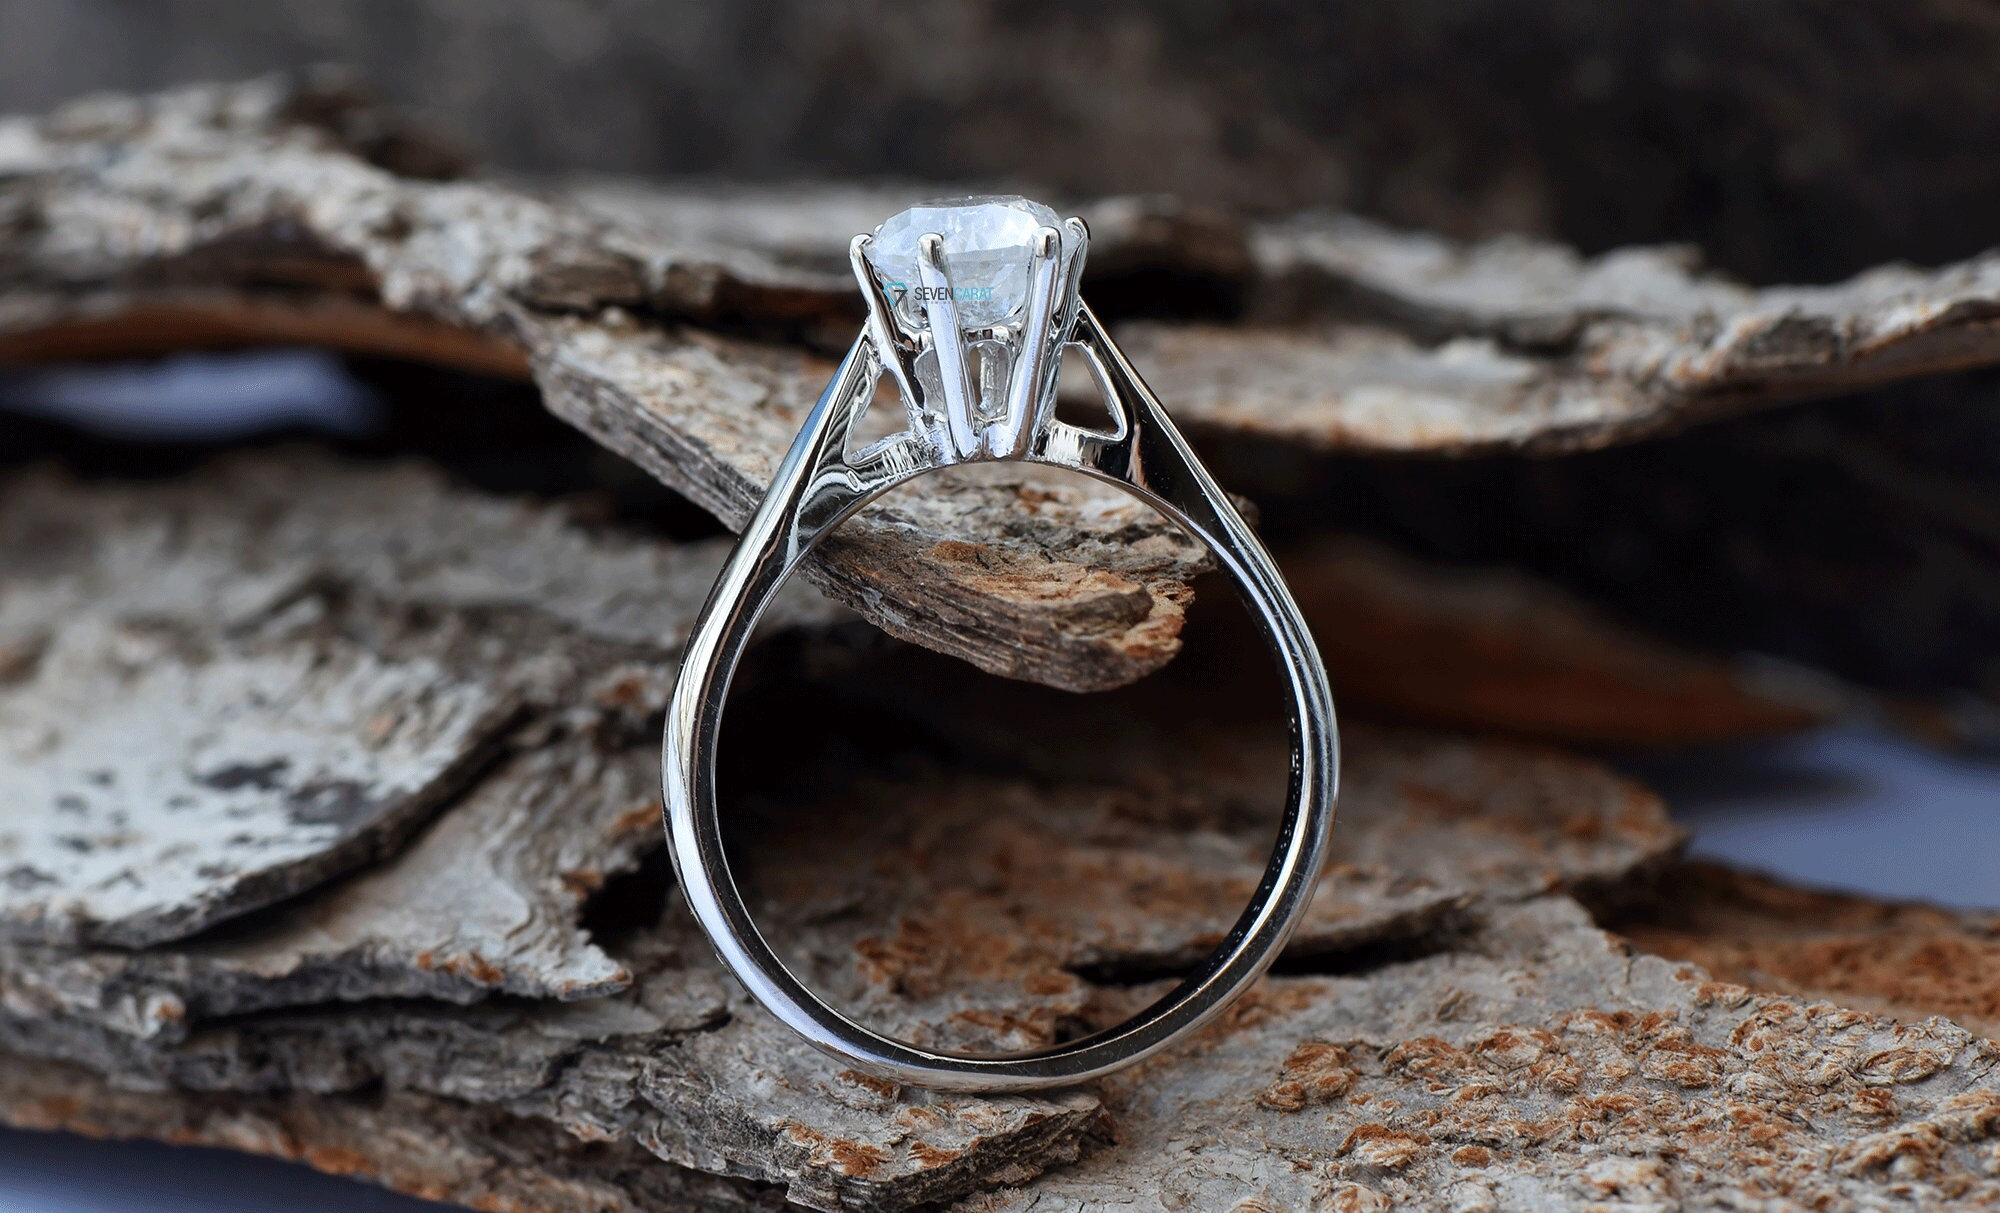 Amazon.com: Awmnjtmgpw 925 Sterling Silver Oval Cut 3 Carat Cubic Zircon Engagement  Diamond Ring Wedding Ladies Elegant Diamond Ring Size 6-10 (Size 7) :  Clothing, Shoes & Jewelry